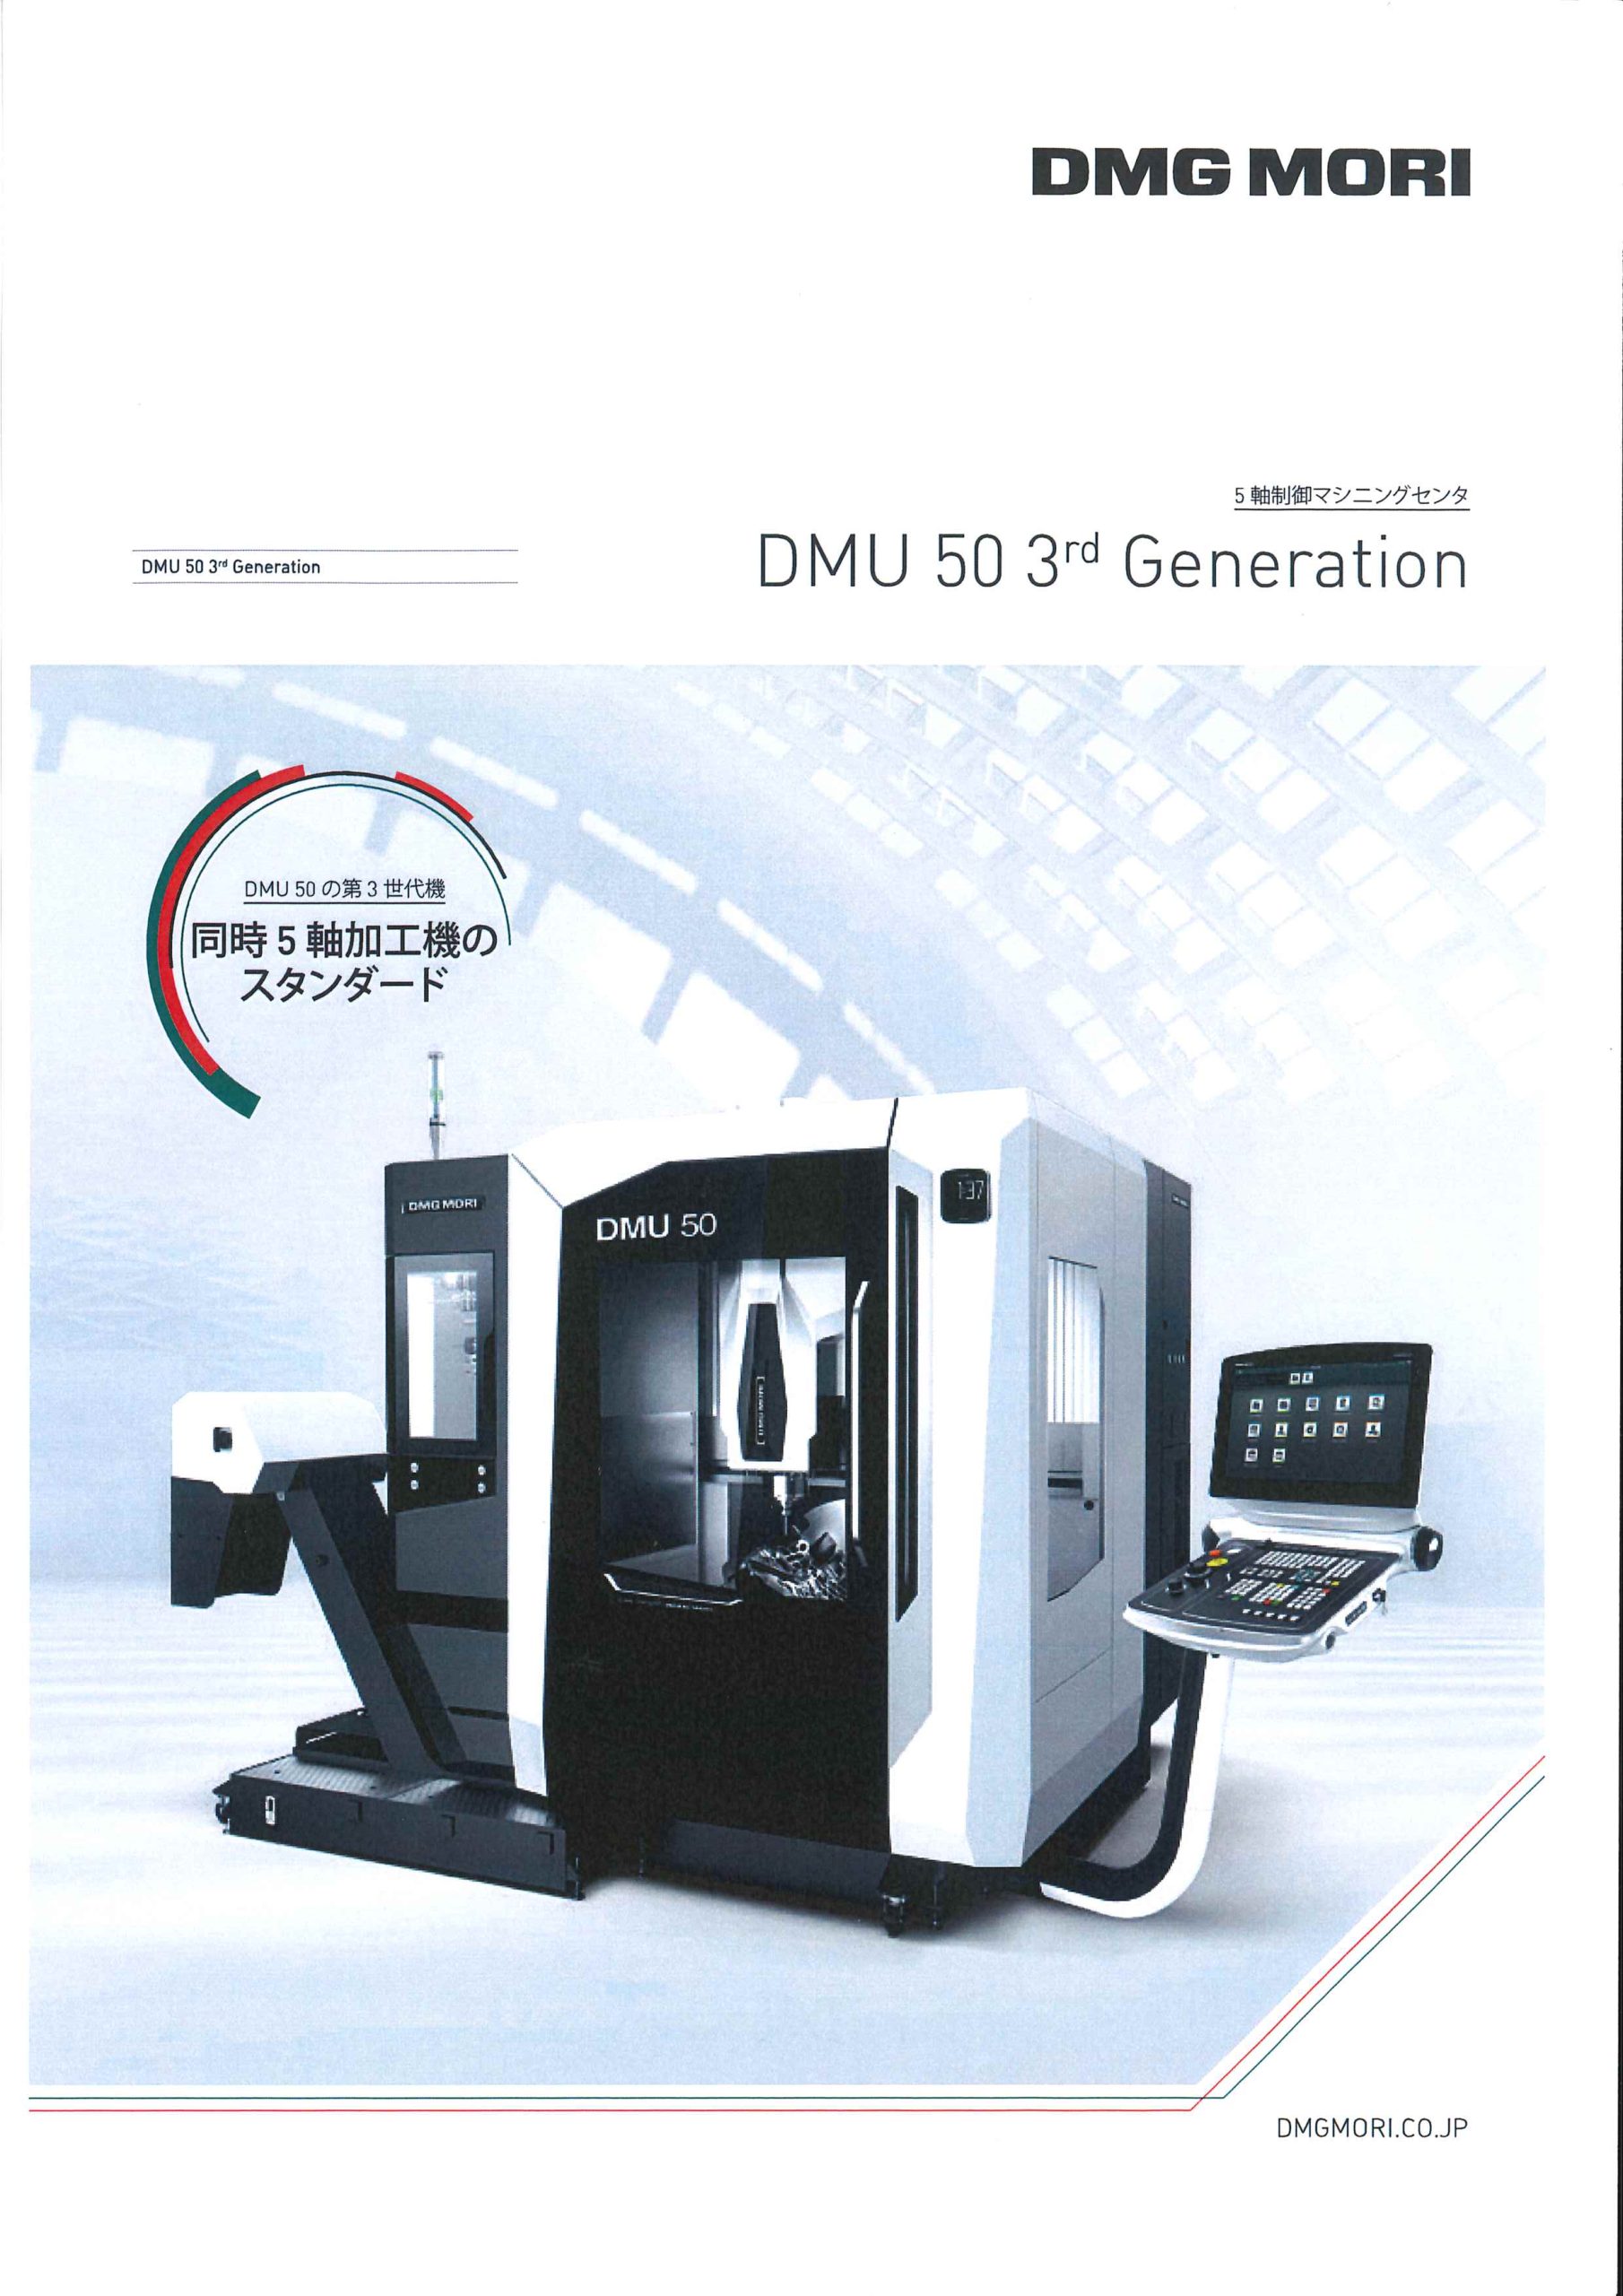 DMG MORI 5軸制御マシニングセンタDMU503